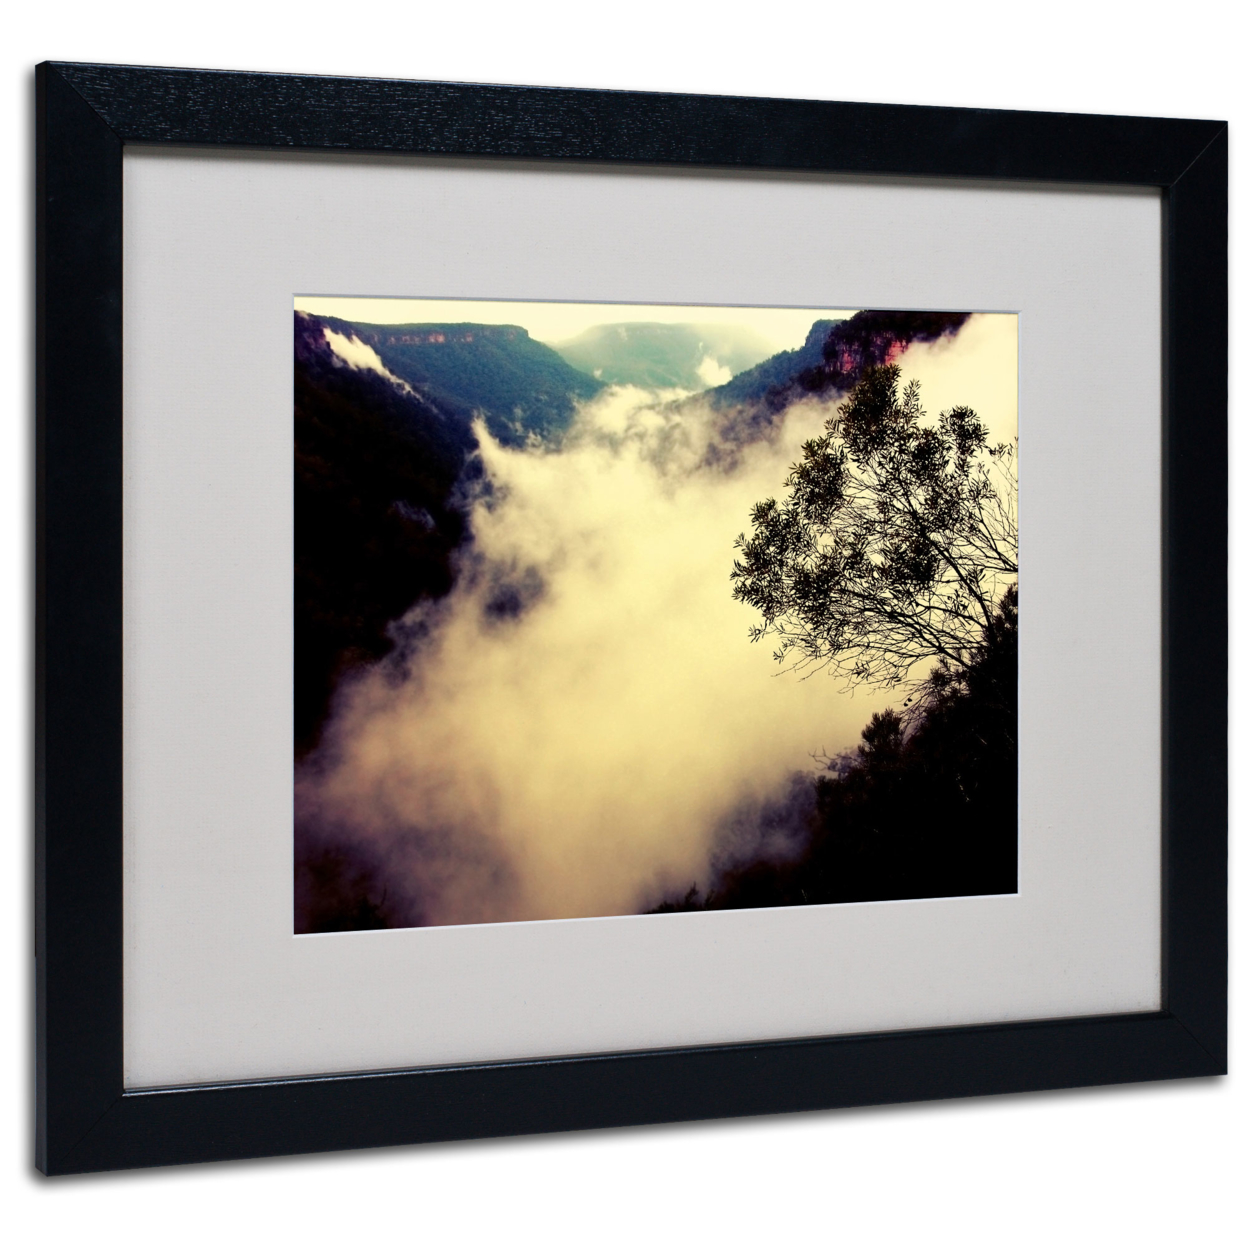 Beata Czyzowska Young 'Valley Of Light' Black Wooden Framed Art 18 X 22 Inches